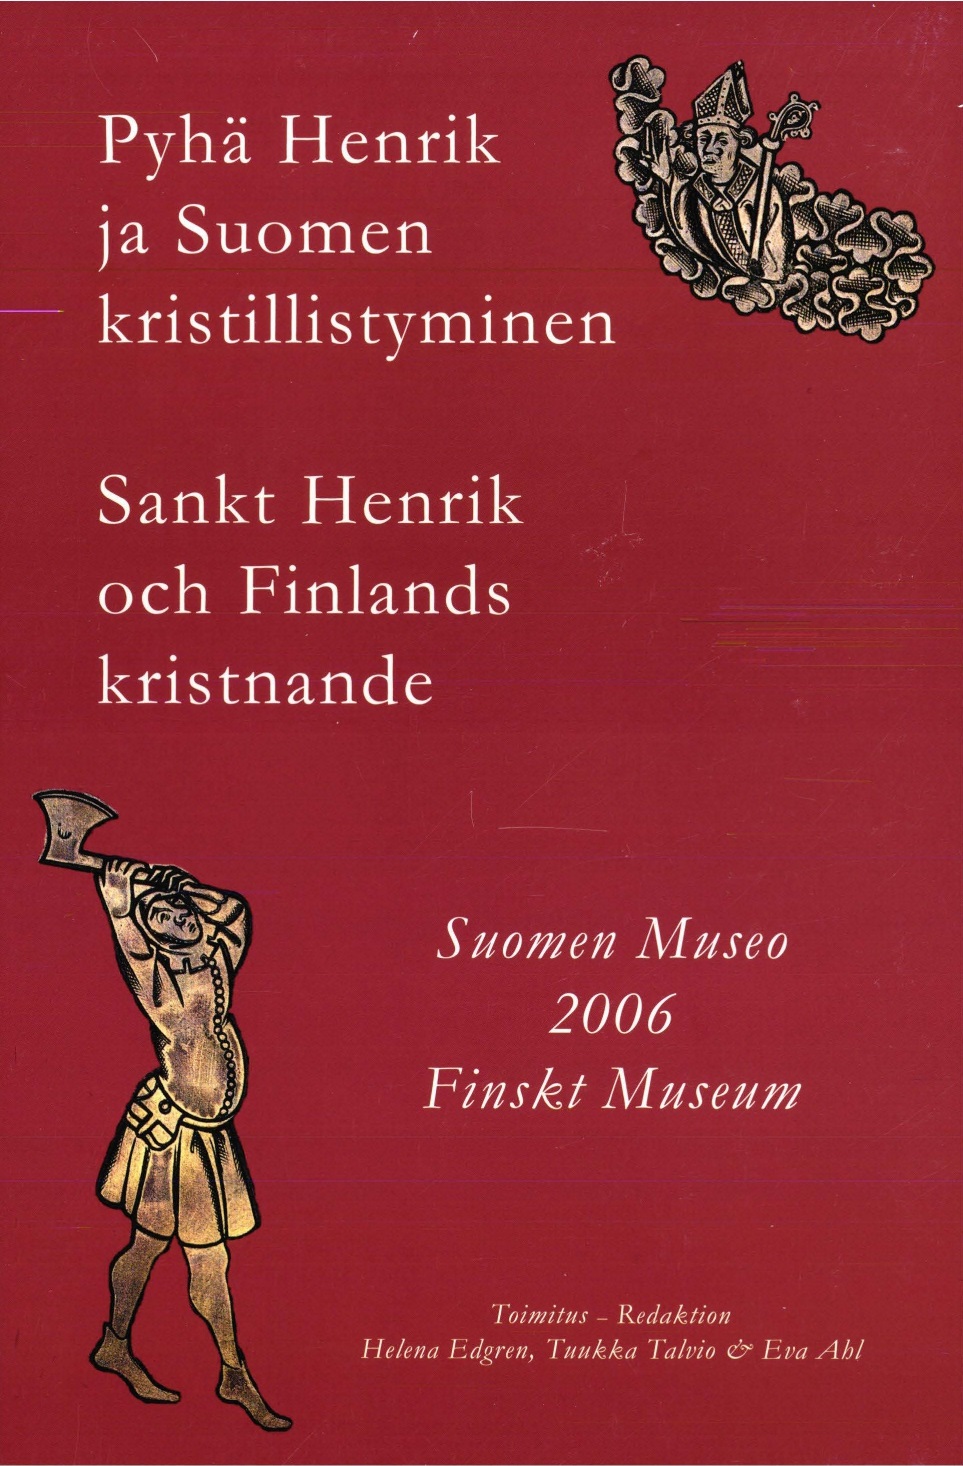 					Visa Vol 113: Suomen Museo – Finskt Museum 2006
				